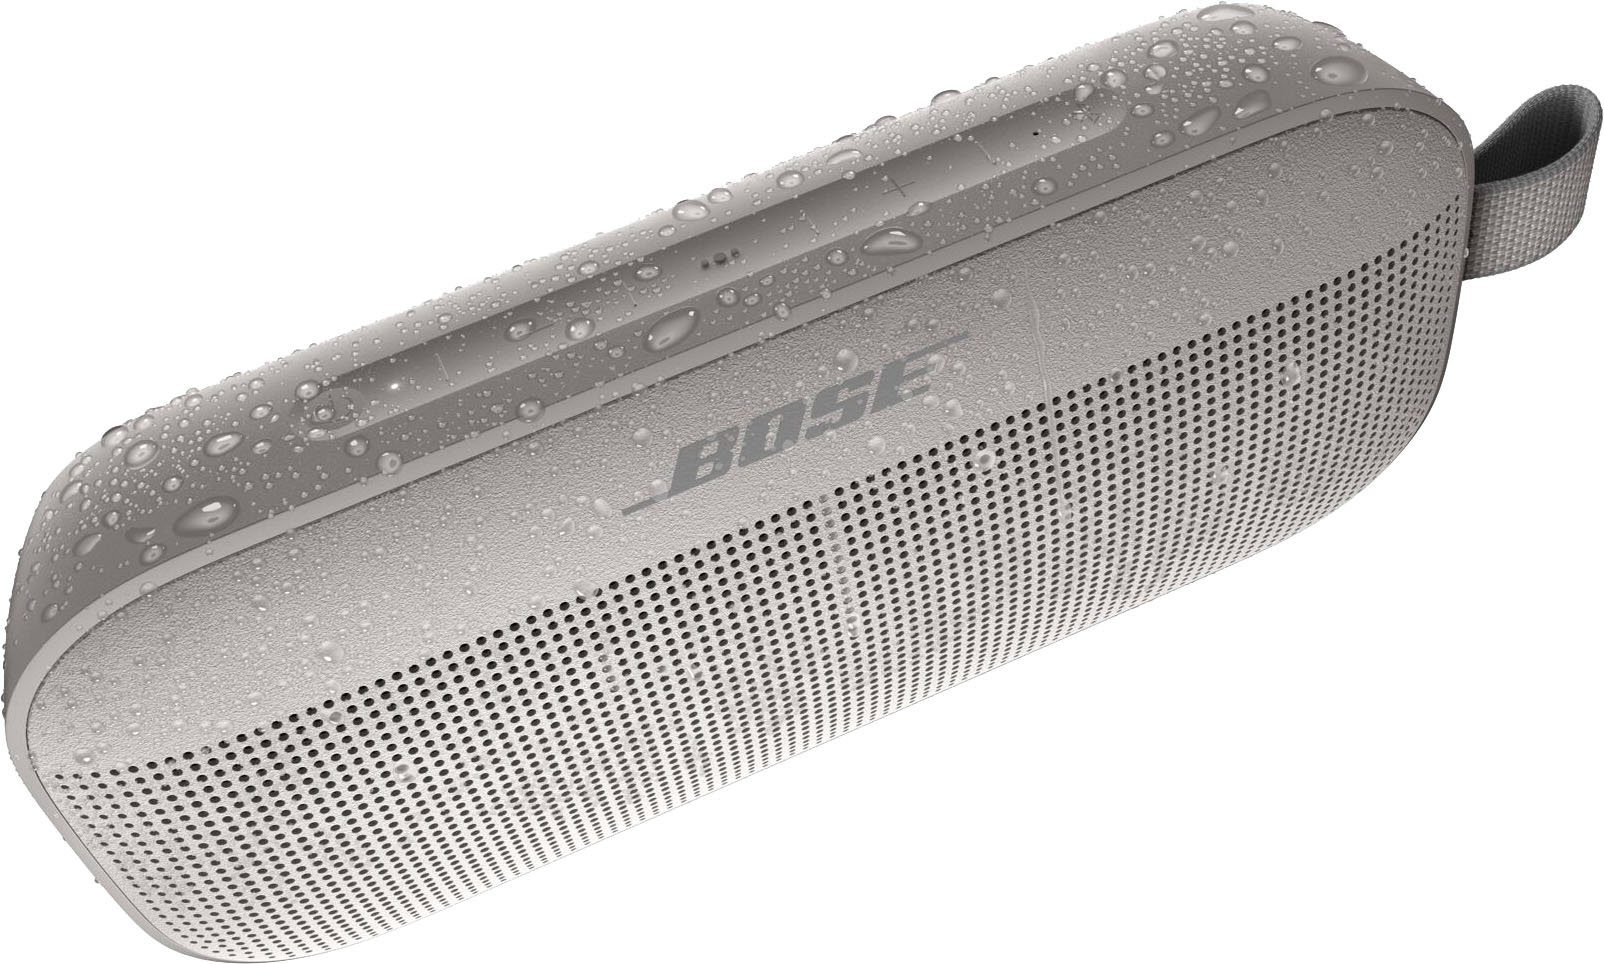 Bose SoundLink weiß Stereo (Bluetooth) Flex Lautsprecher